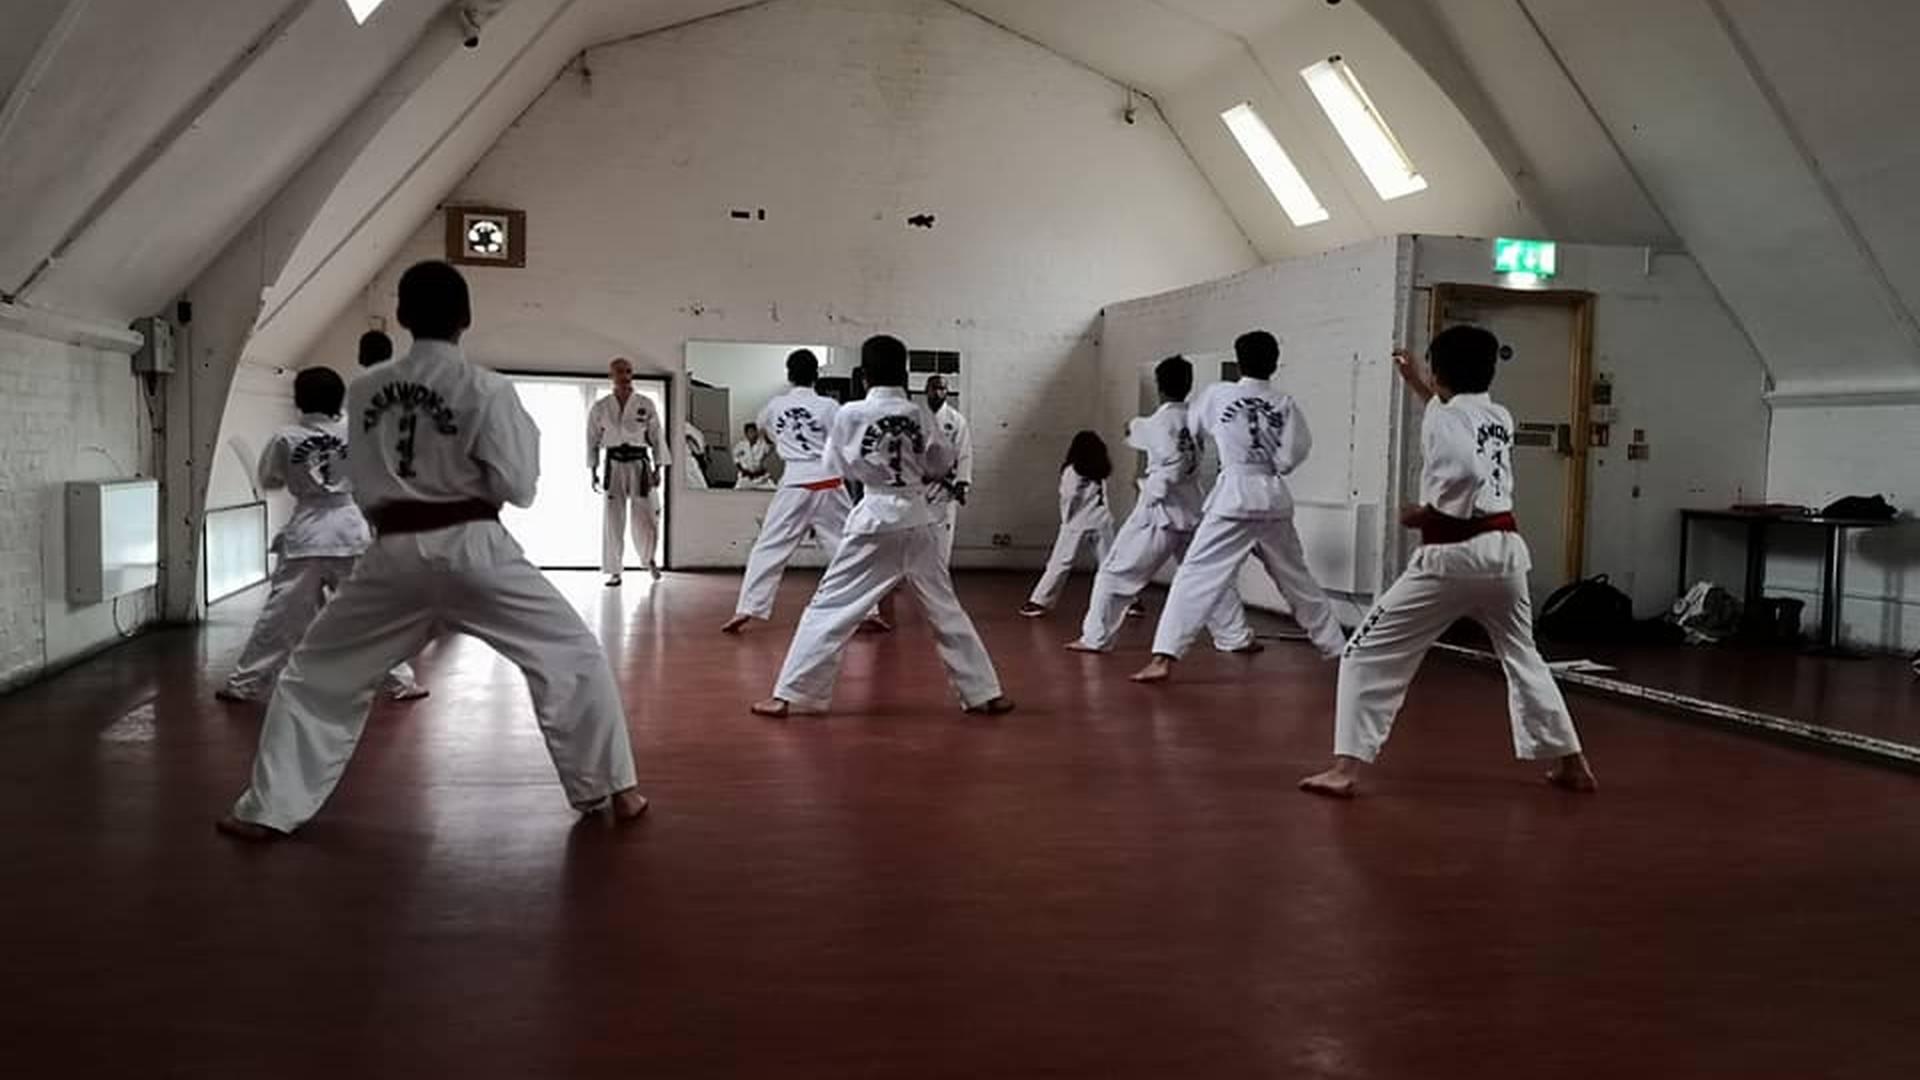 The Taekwondo & Movement Centre photo